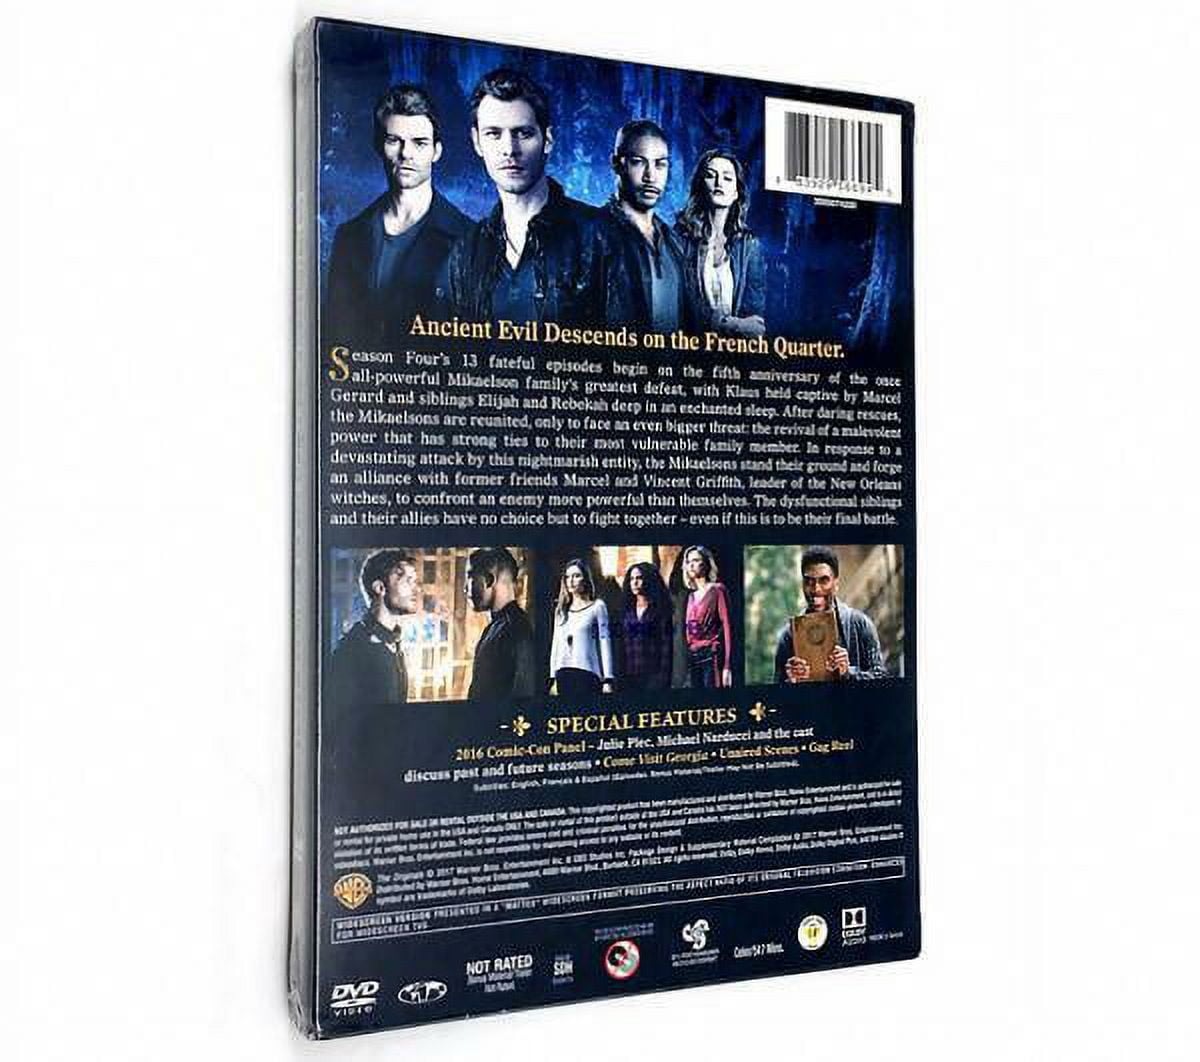 The Originals: The Complete Fourth Season (DVD) - Walmart.com